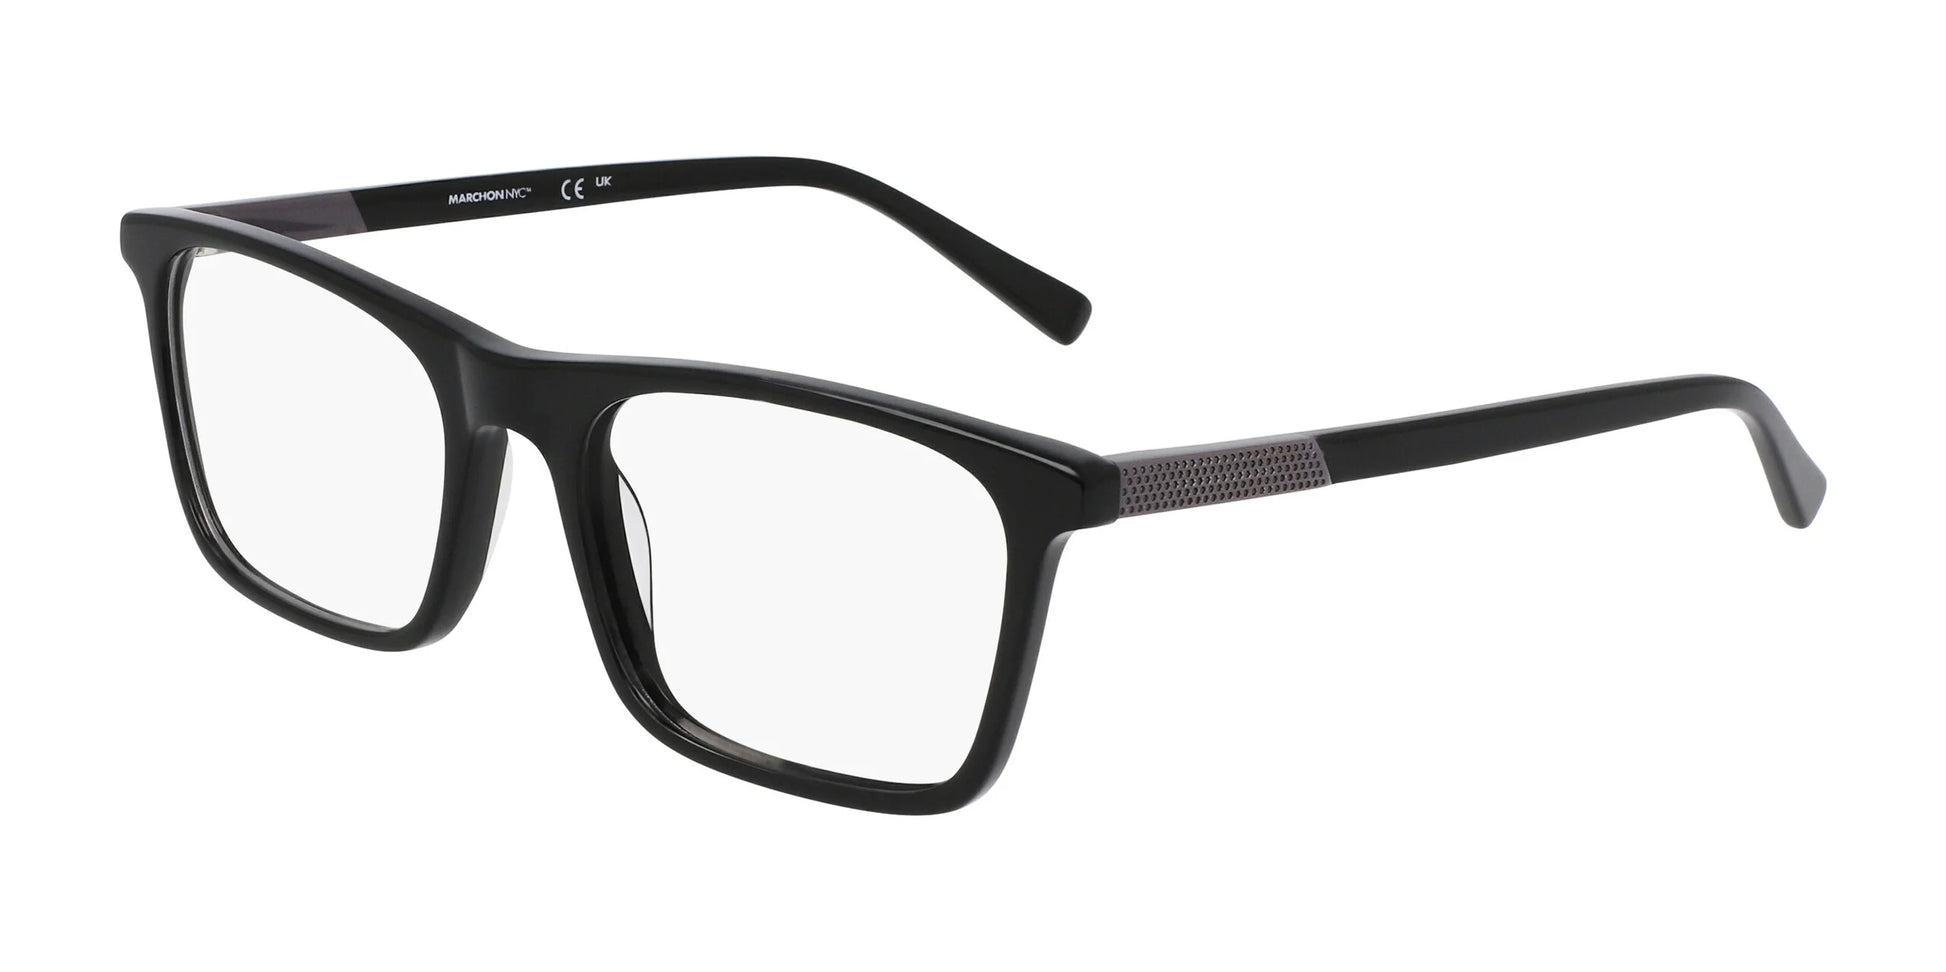 Marchon NYC 3017 Eyeglasses Black